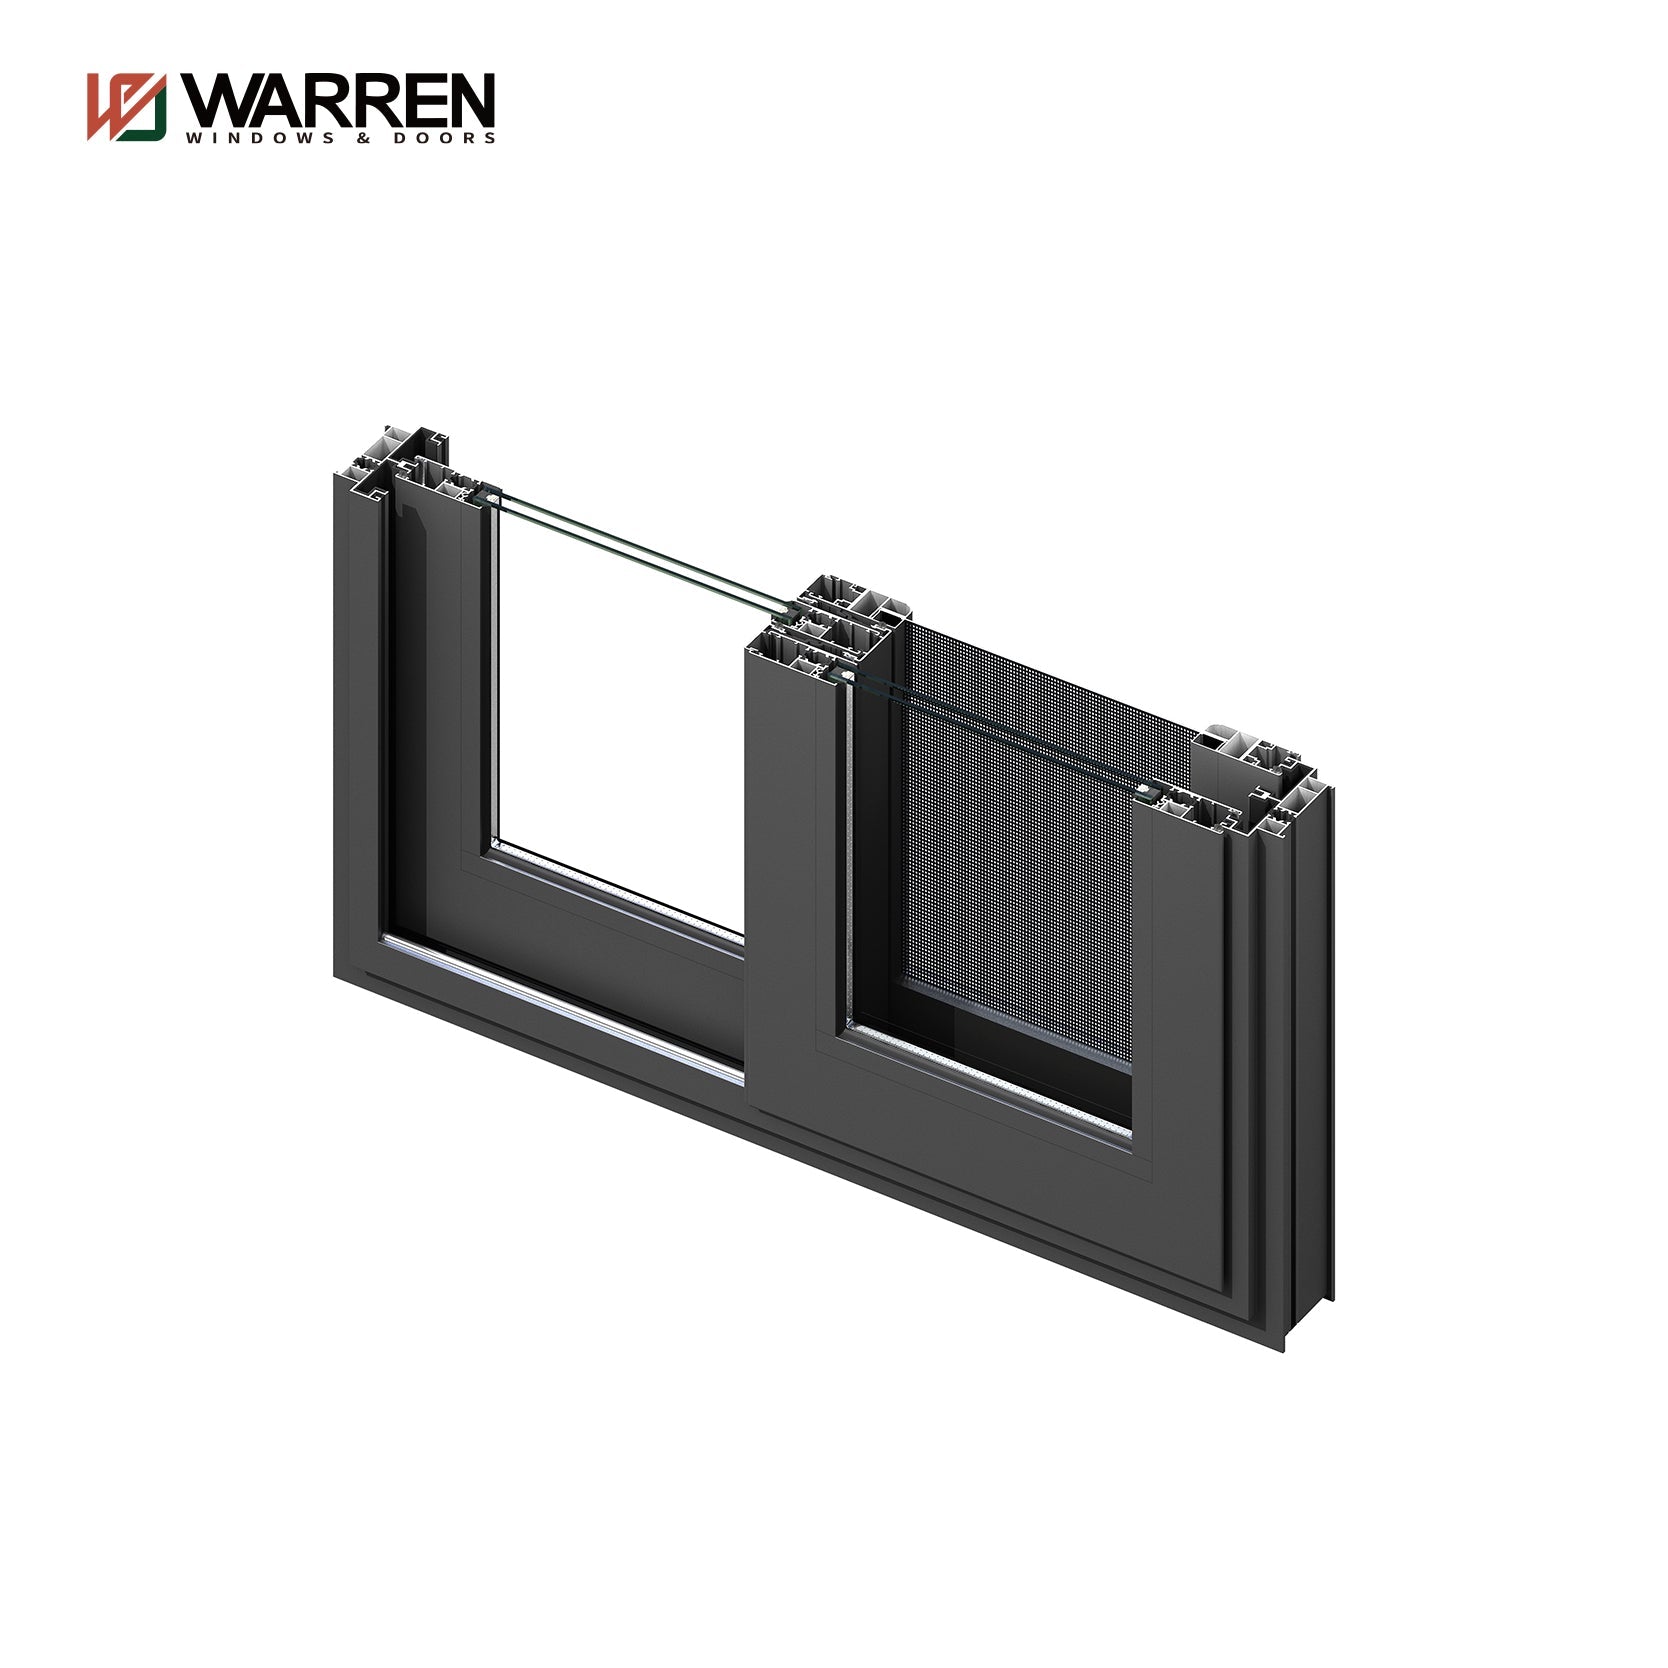 Warren 36x72 window High Efficiency NFRC CE Certificate Simple Design Double Glazed Standred Aluminum Sliding Window